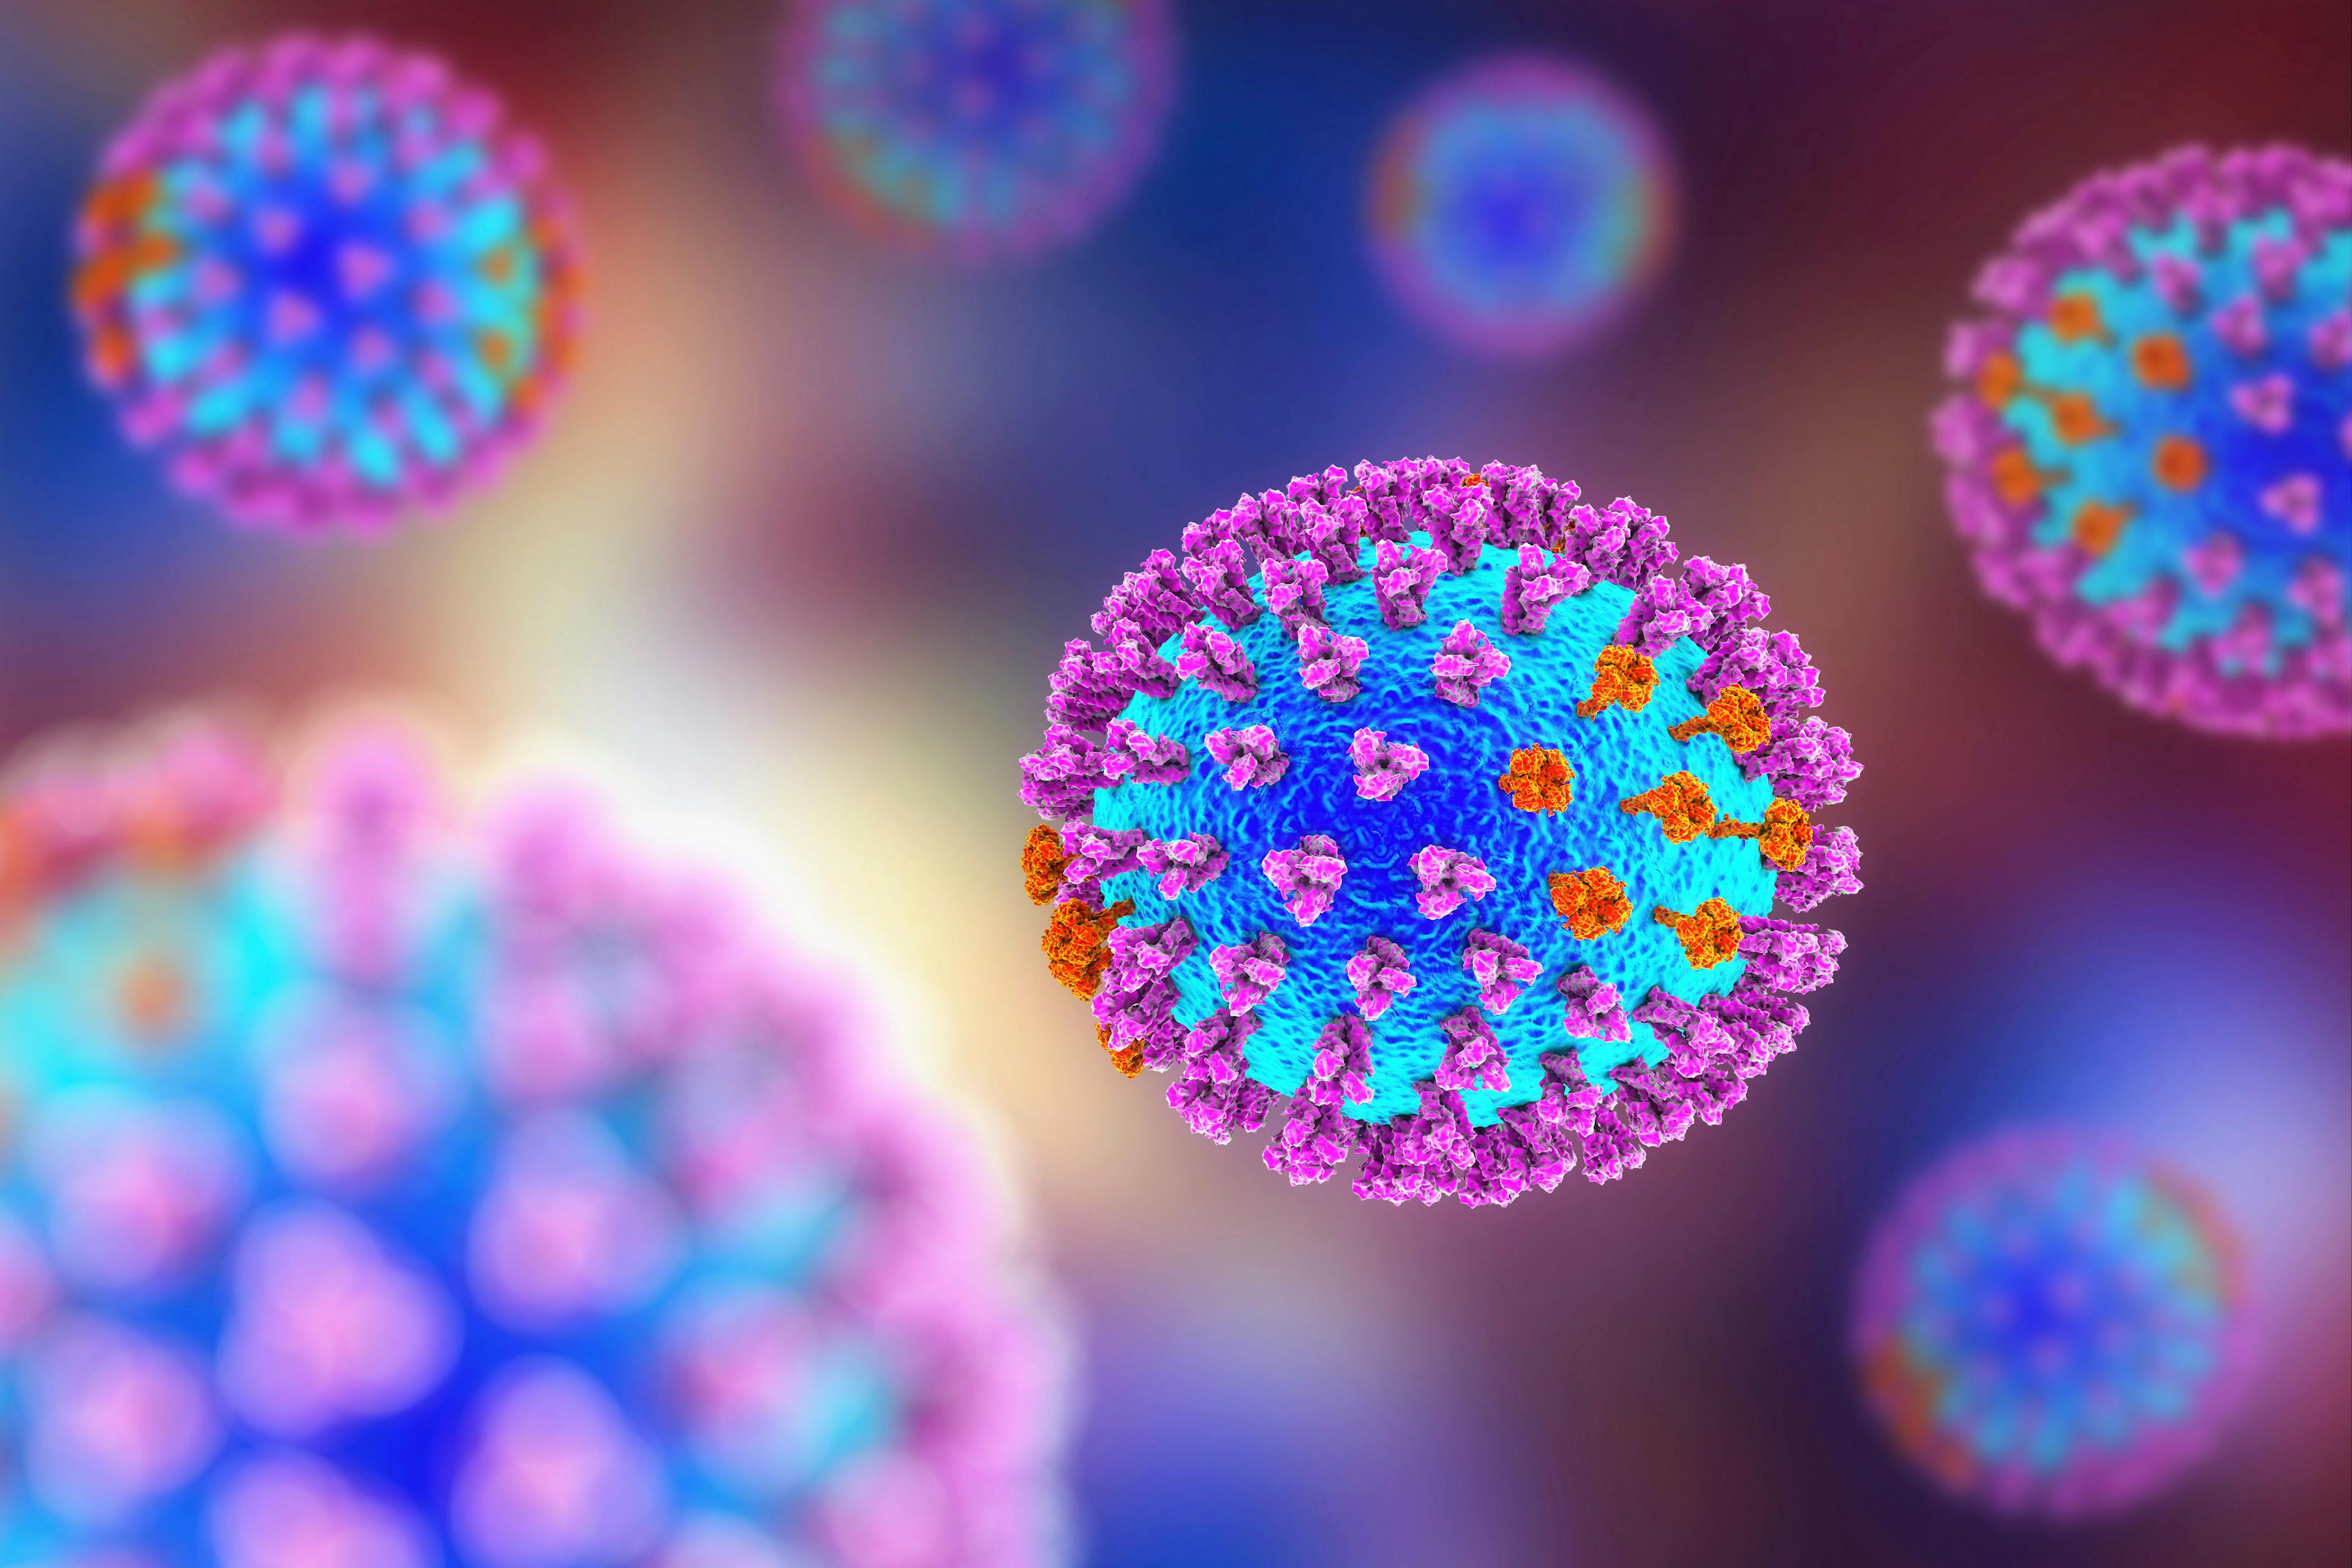 Influenza virus. 3D illustration showing surface glycoprotein spikes hemagglutinin purple and neuraminidase orange | Image Credit: © Dr_Microbe - stock.adobe.com